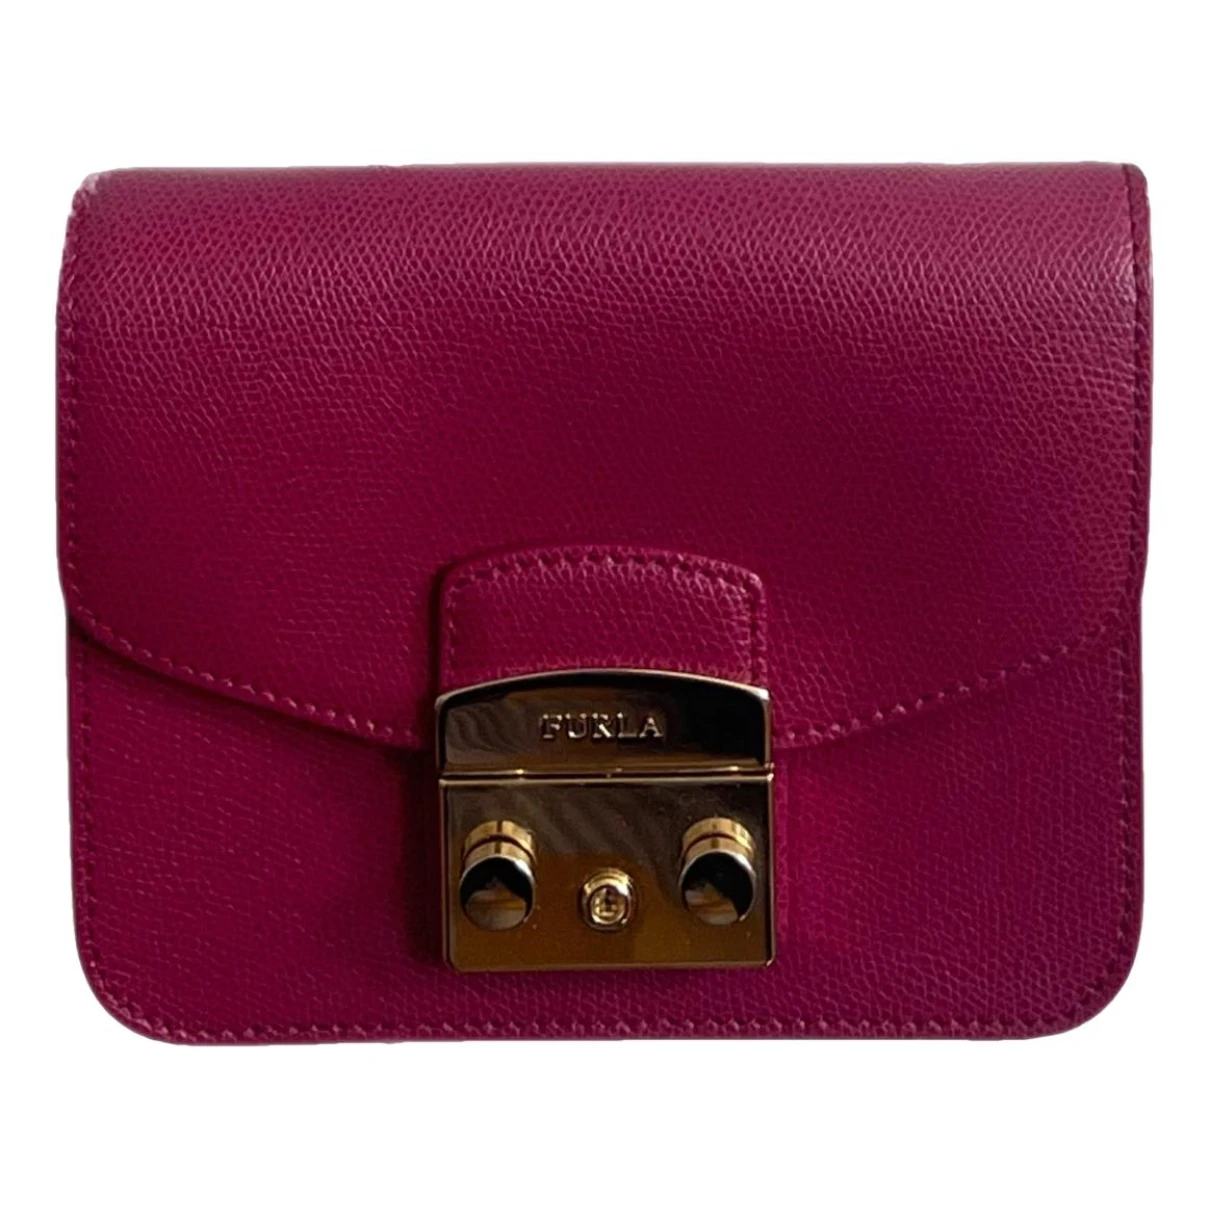 Pre-owned Furla Metropolis Leather Handbag In Pink